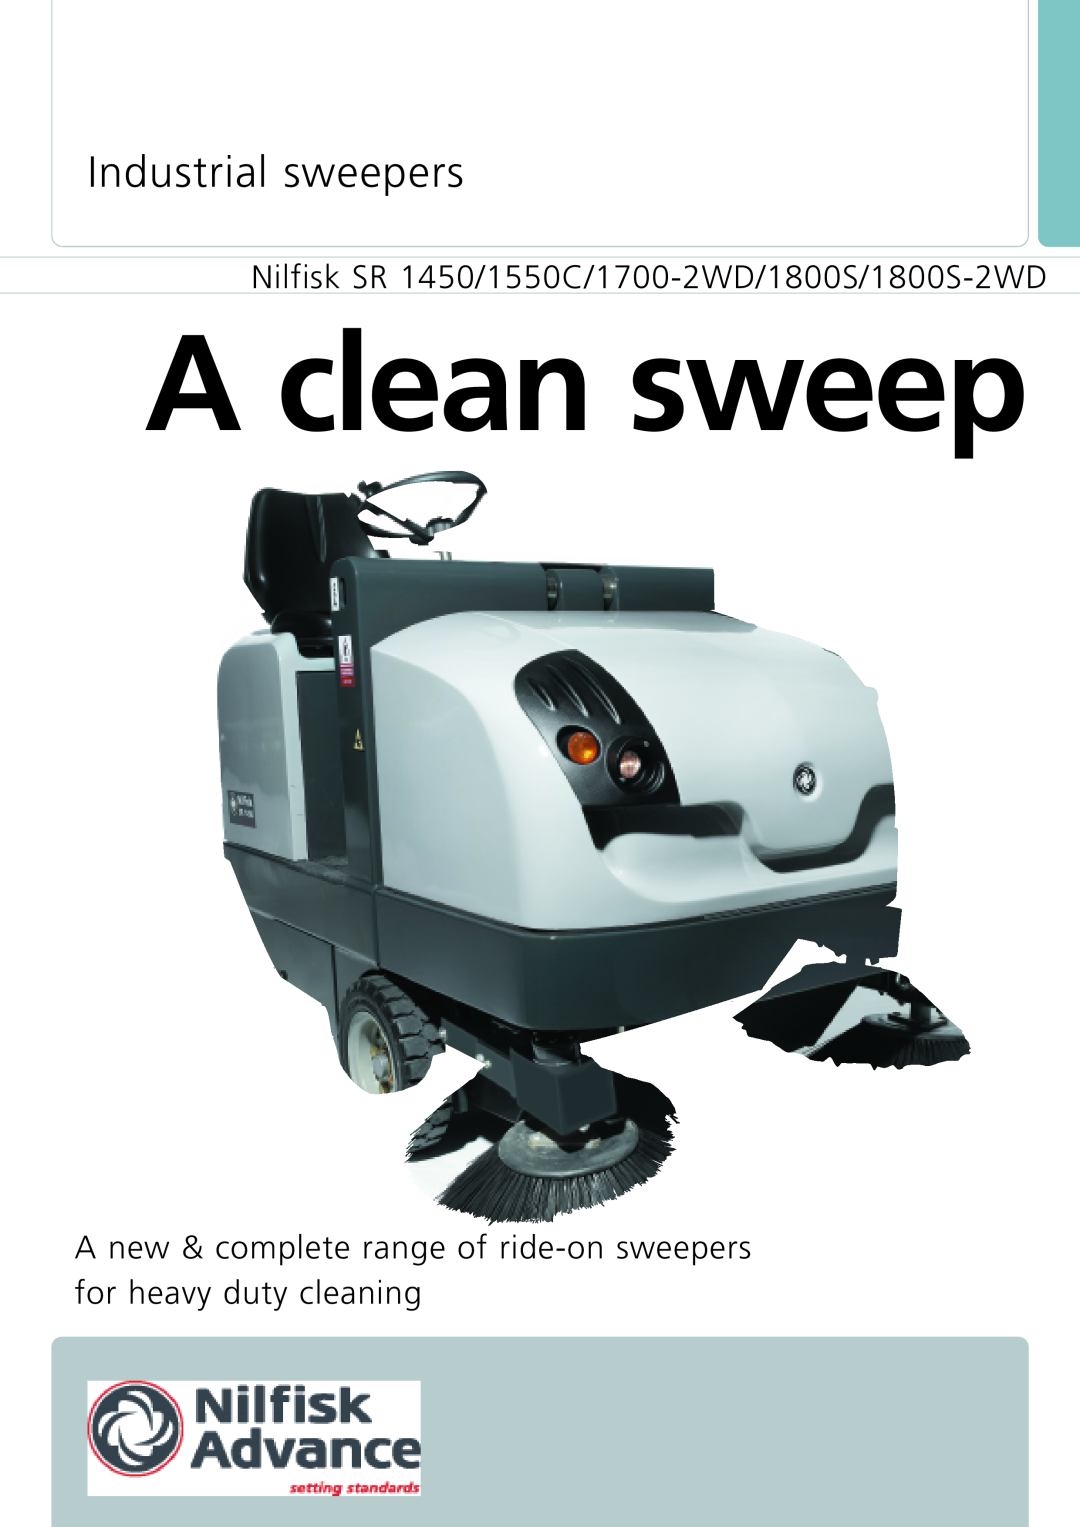 Nilfisk-ALTO SR 1700, SR 1800S, SR 1550C Industrial sweepers, A clean sweep, Nilfisk SR 1450/1550C/1700-2WD/1800S/1800S-2WD 